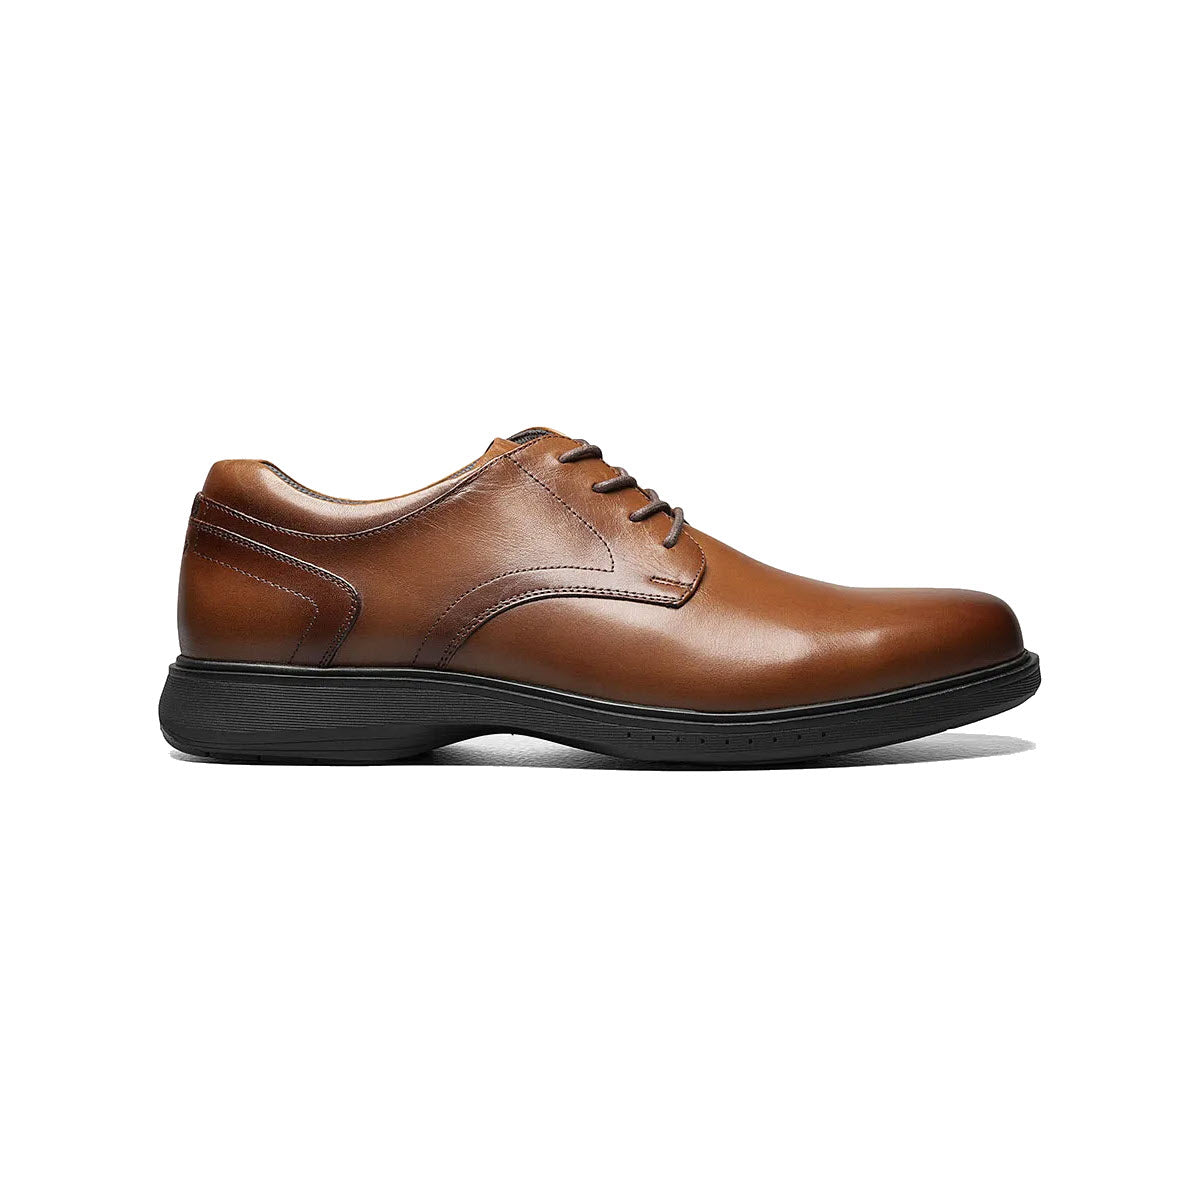 Nunn Bush Plain Toe Oxford dress shoe with black, slip-resistant sole on a white background.